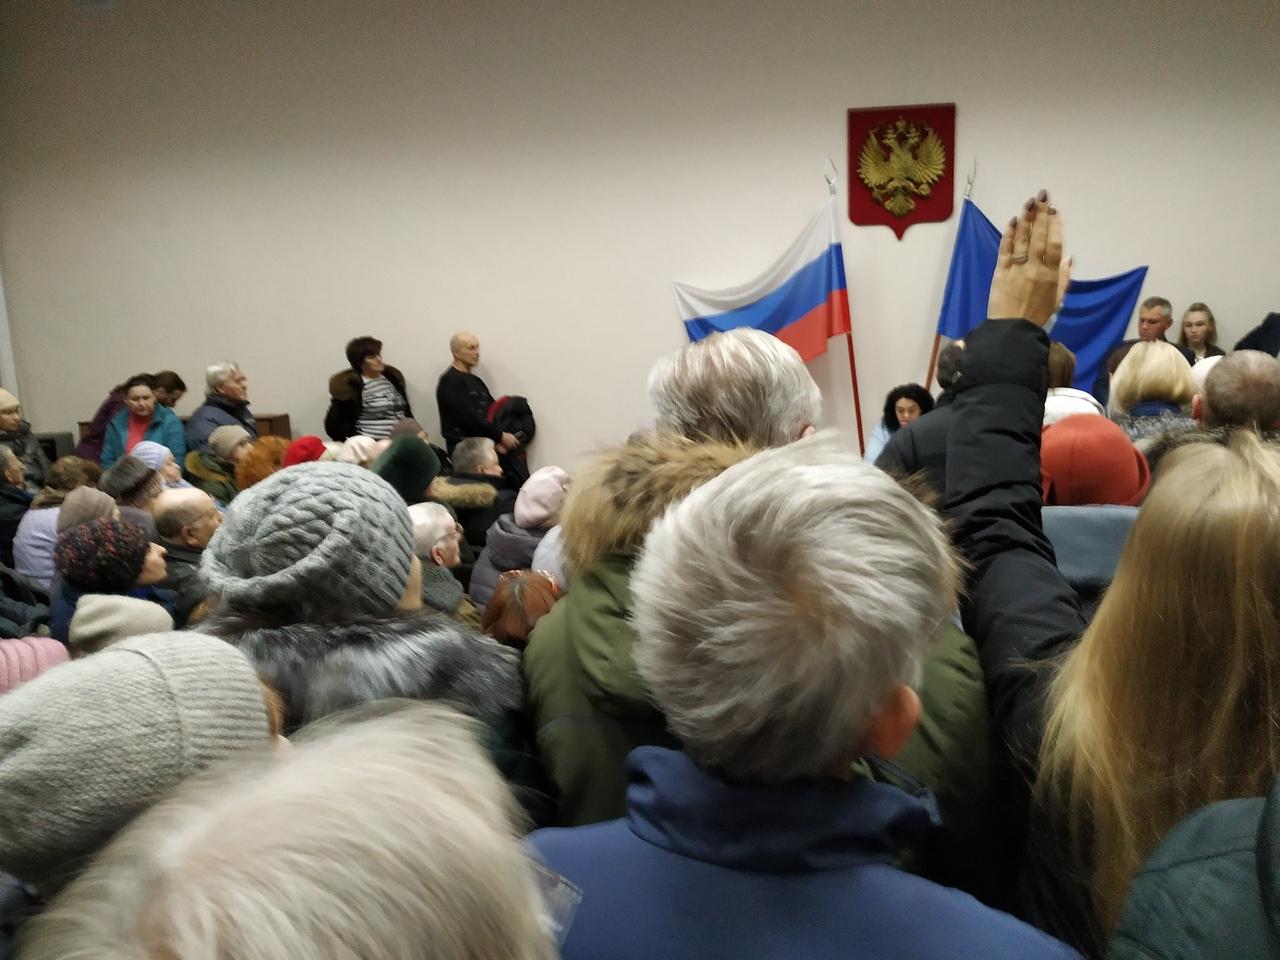 "Народ не влезает в зал": заволжане бунтуют против отключения газа в Ярославле